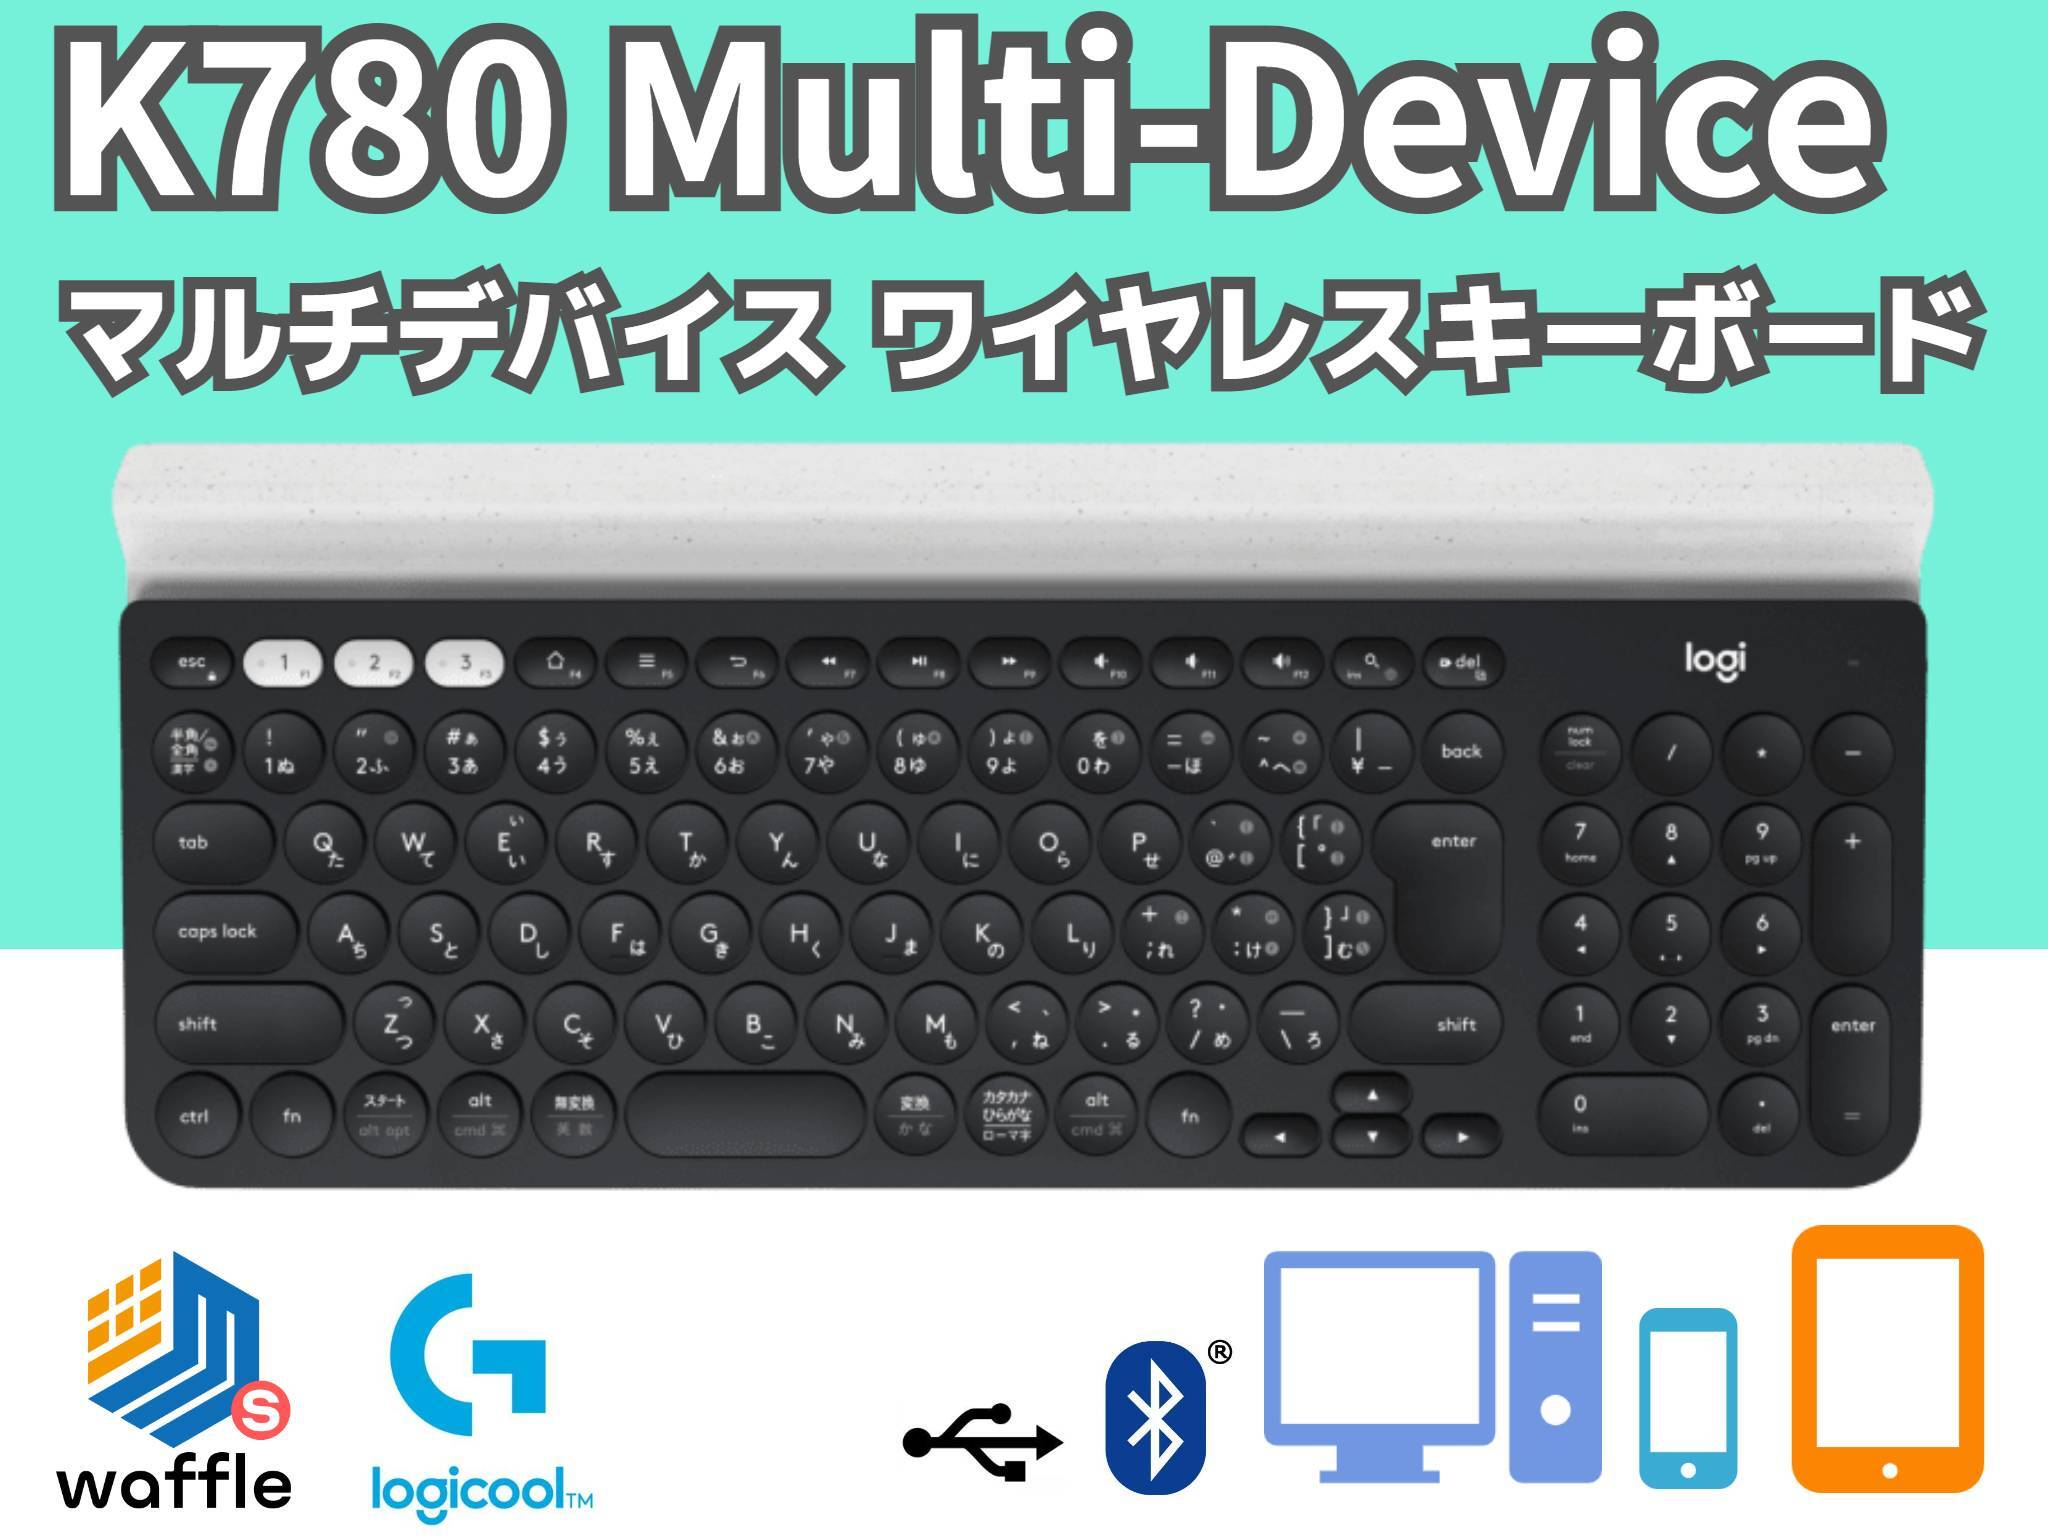 logicool K780 Multi-Device マルチデバイス ワイヤレスキーボード ...